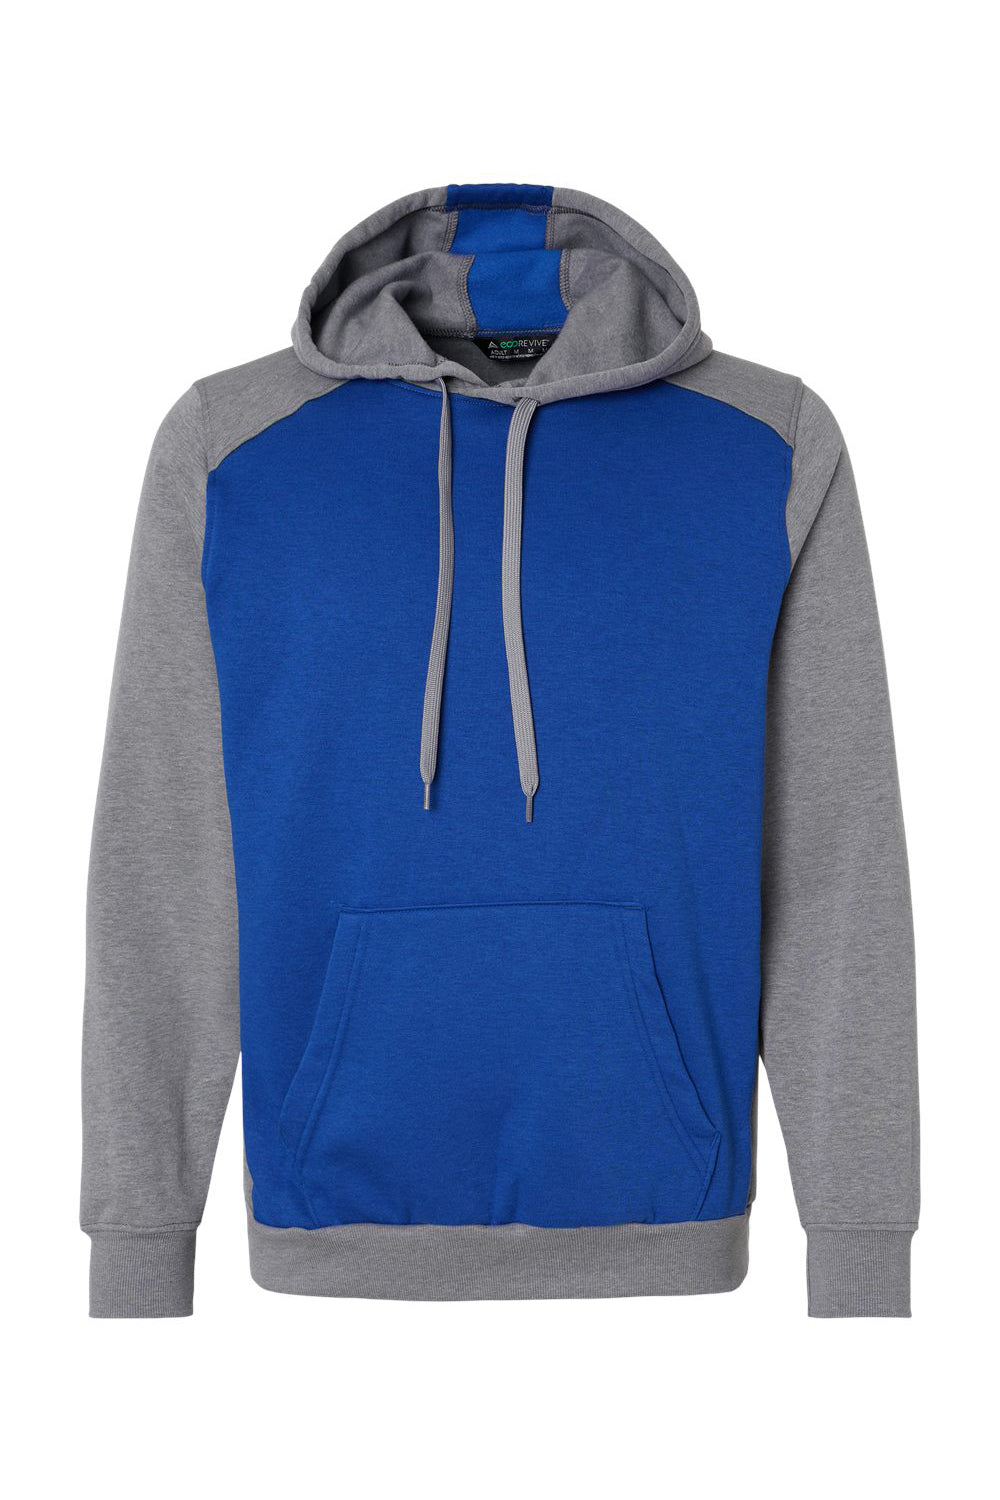 Augusta Sportswear 6865 Mens Eco Revive 3 Season Fleece Hooded Sweatshirt Hoodie Royal Blue/Heather Grey Flat Front